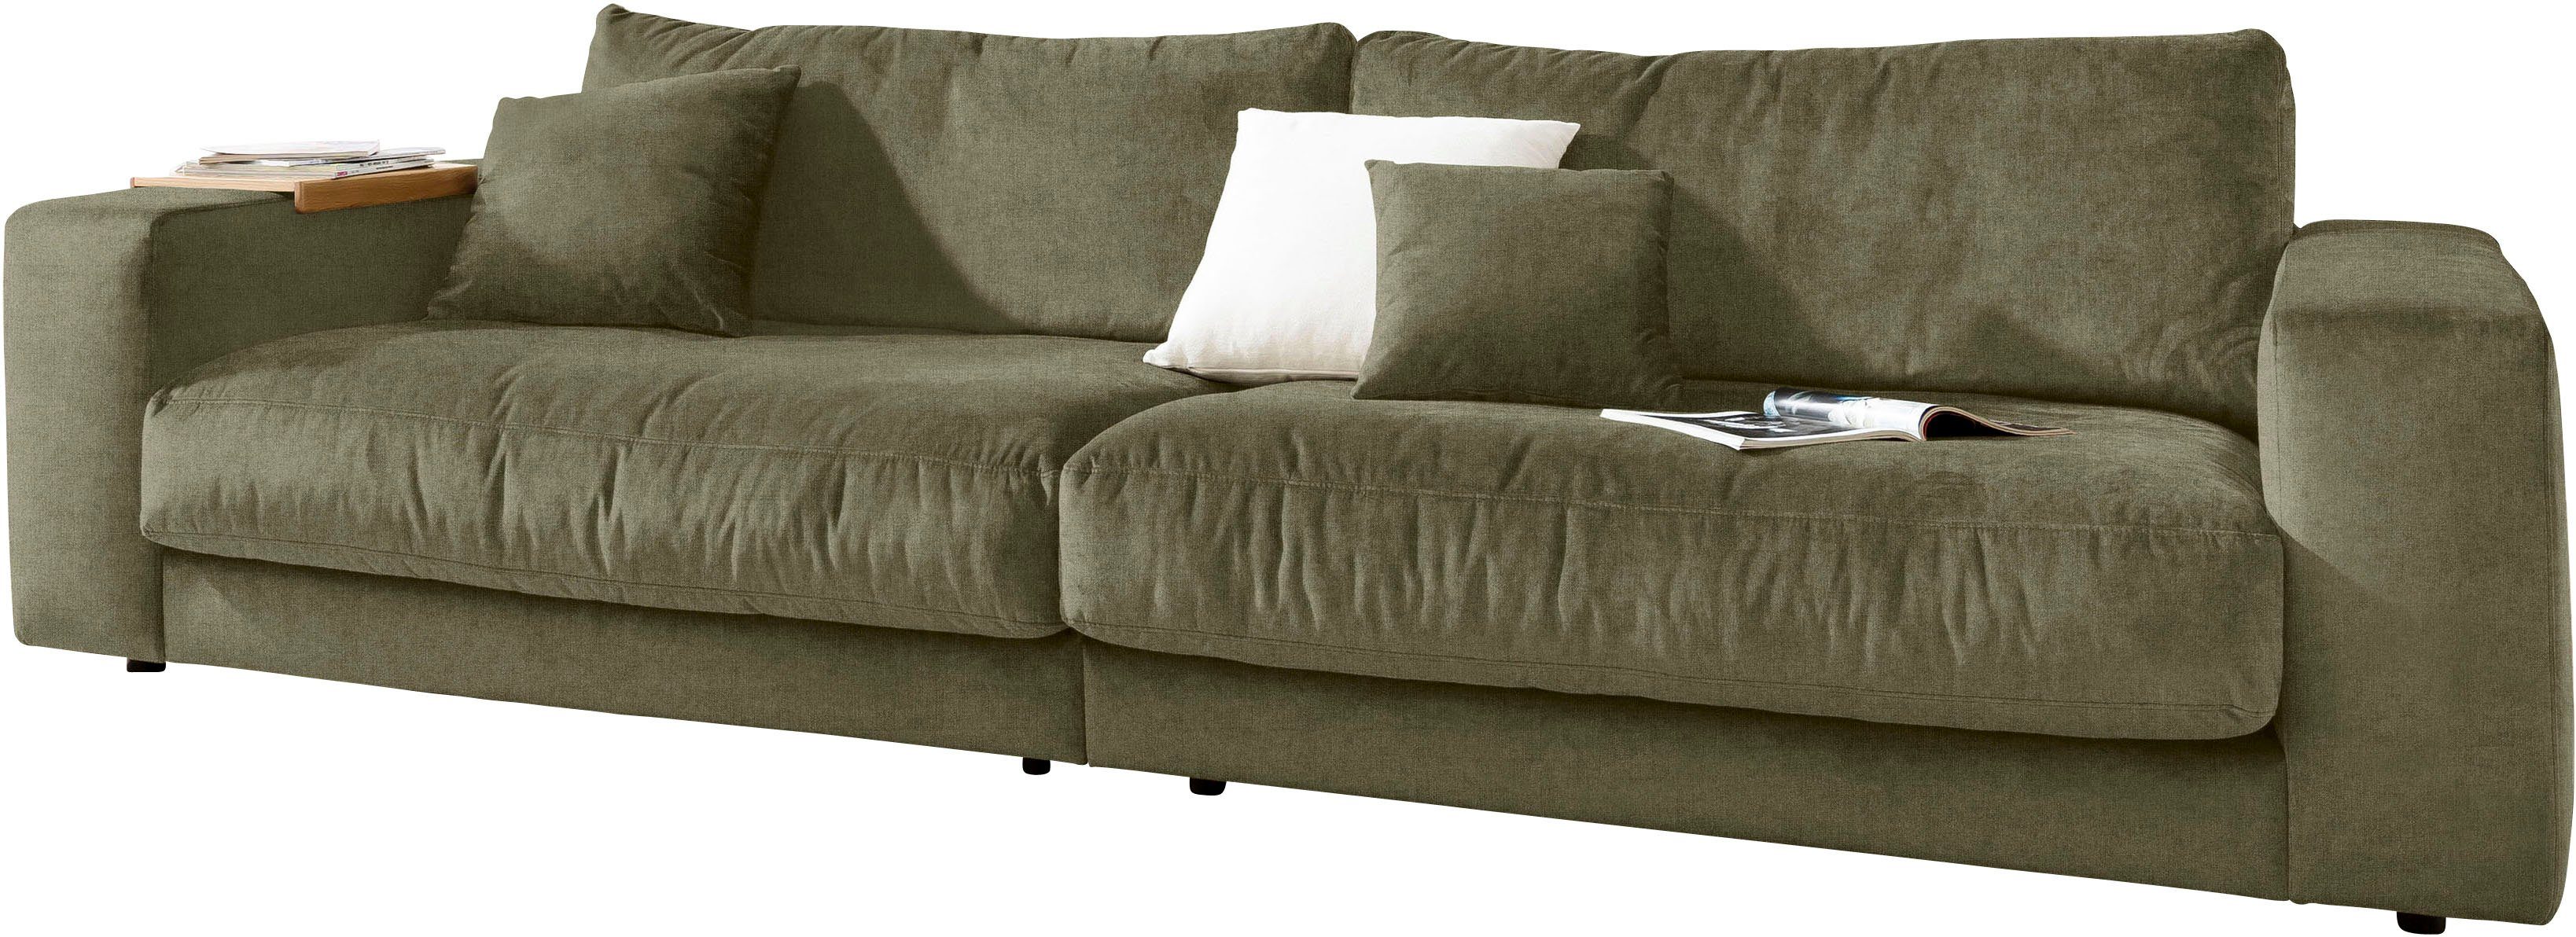 II, Wahlweise incl. Big-Sofa Candy Flatterkissen, Enisa 3C 1 Flecken-Schutz-Bezug care mit Easy